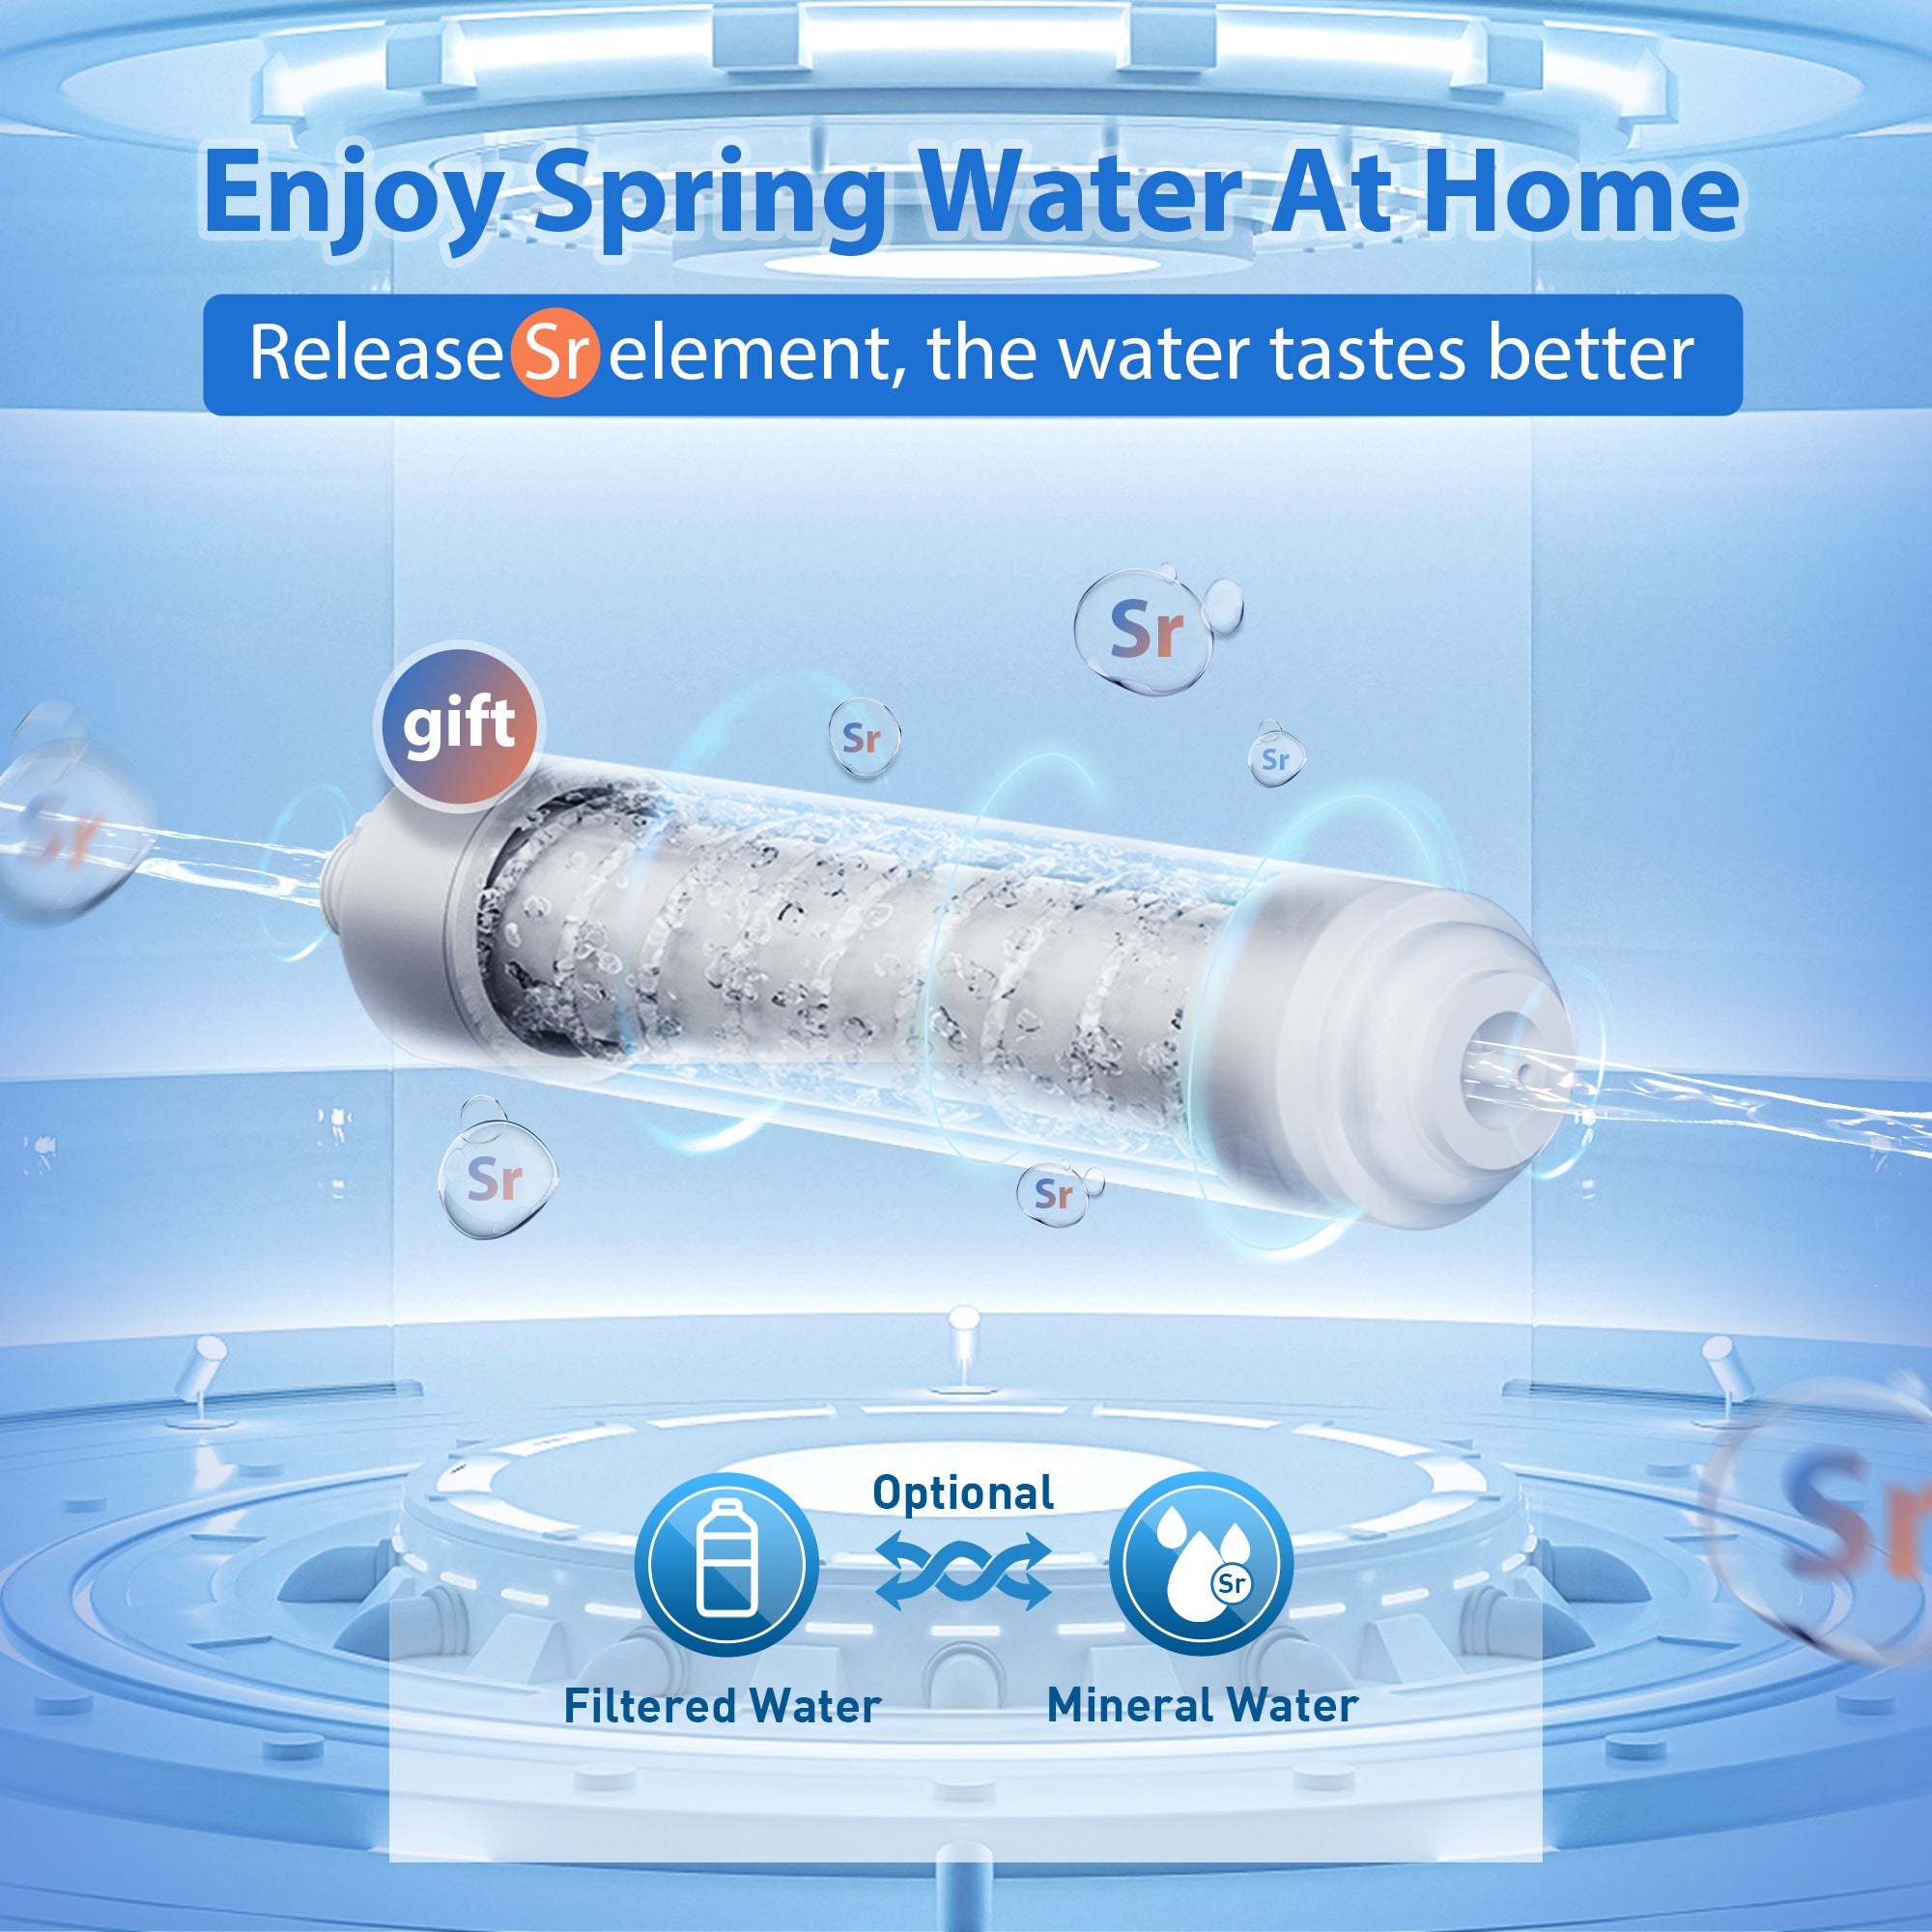 WaterFirst_Lamon Series R1PRO Reverse Osmosis Water Filter System